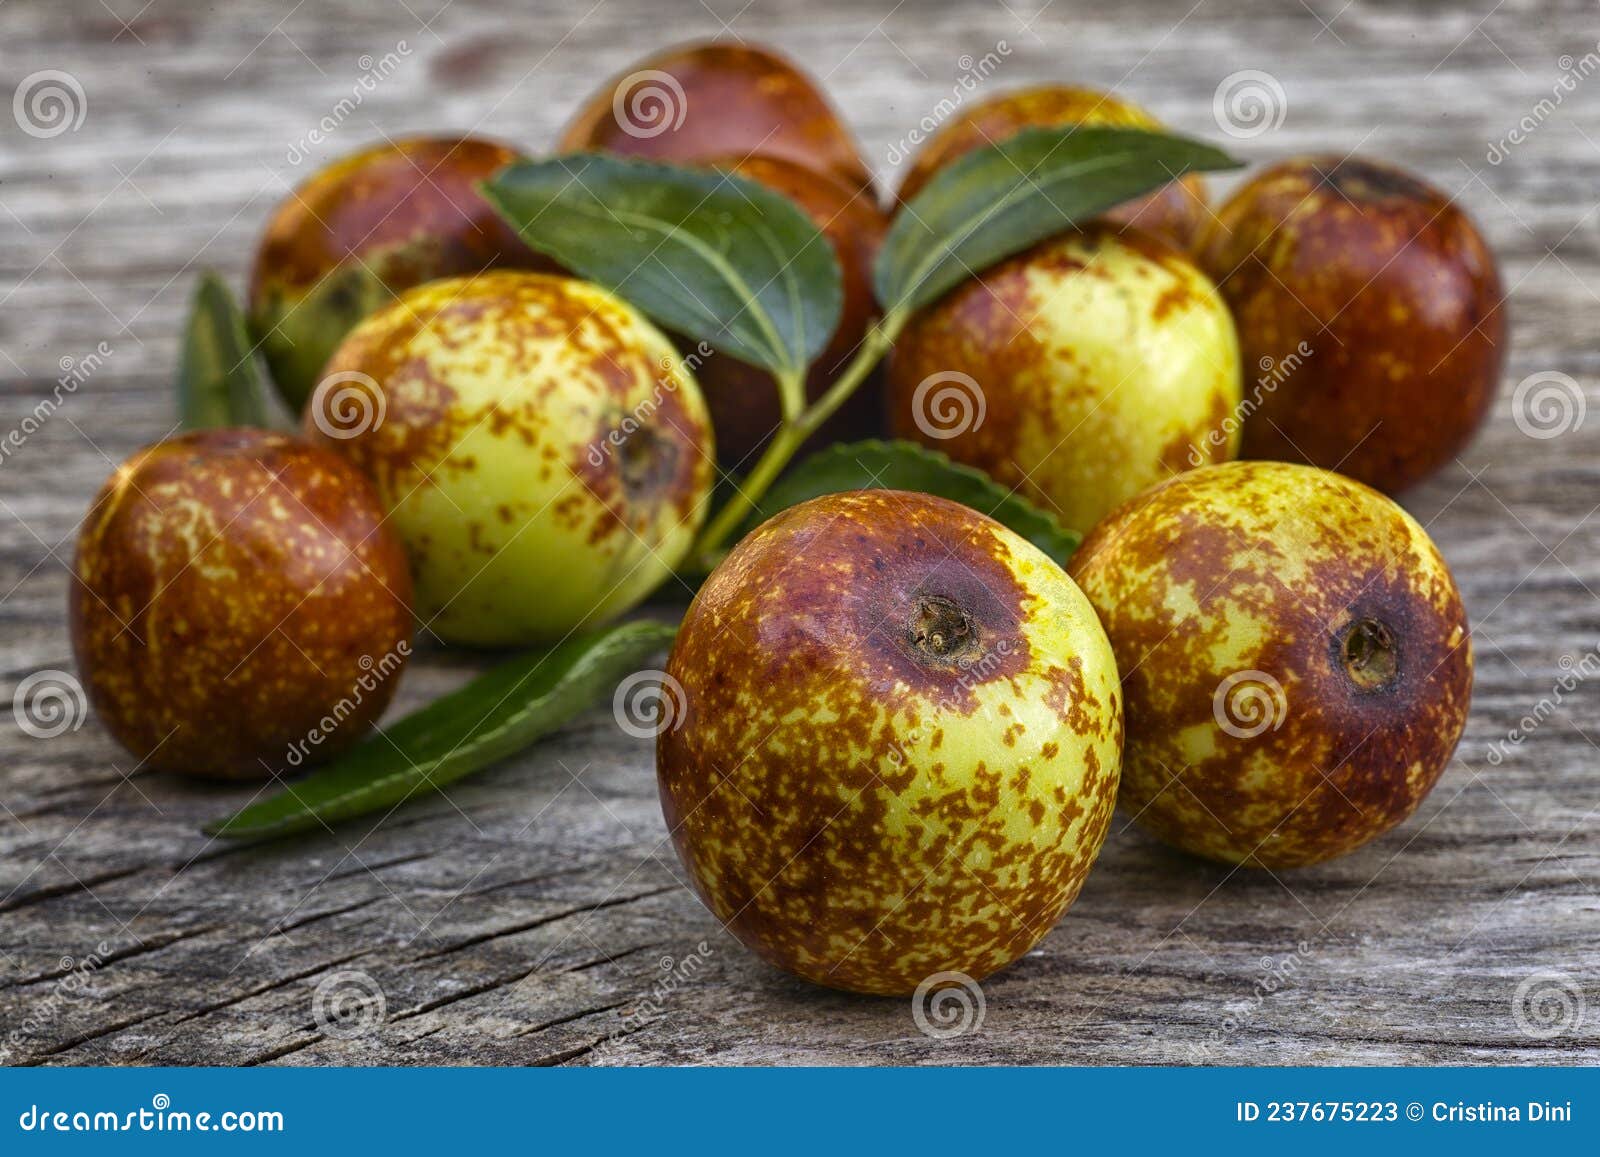 jujube fruits ziziphus jujuba.  healthy fruit cleans blood, contains vitamin c